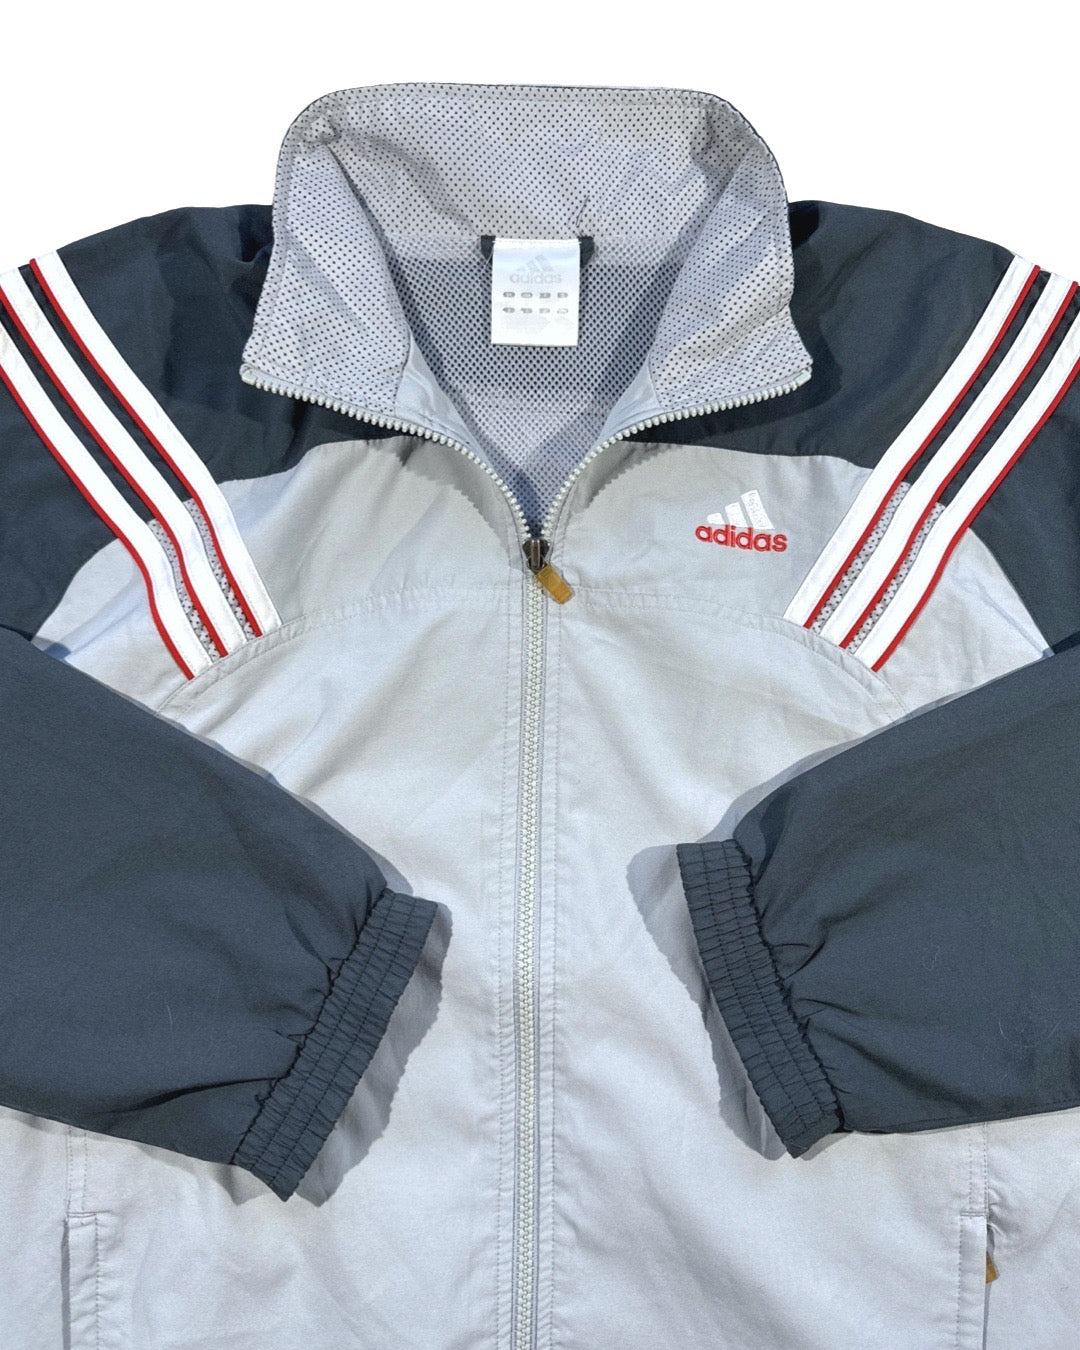 Vintage Adidas Sports Jacket - L